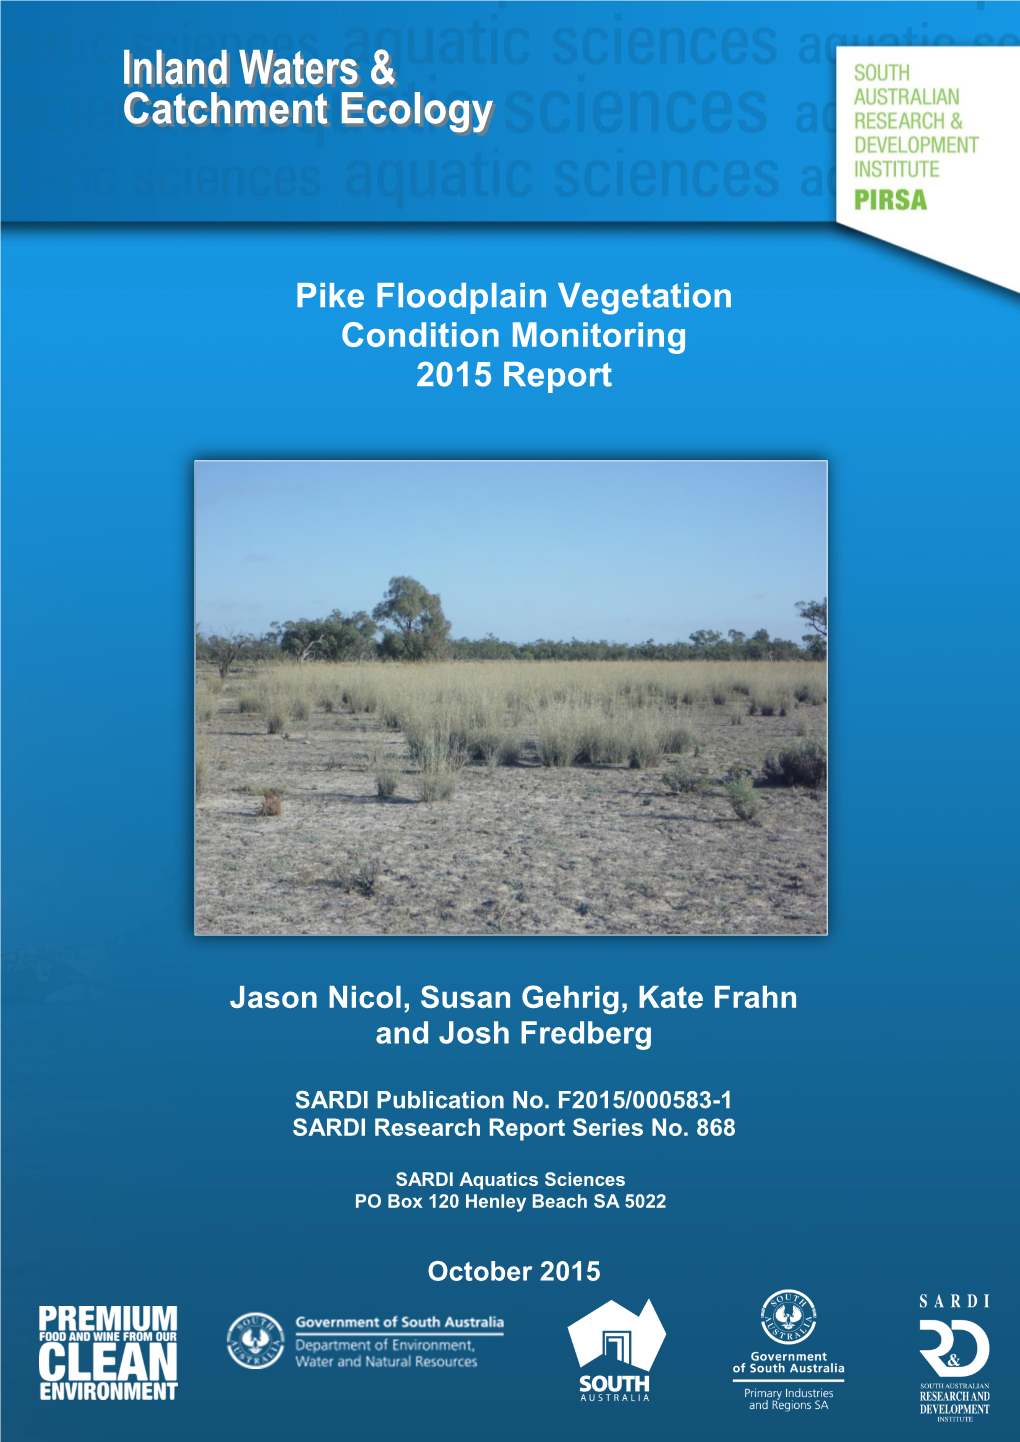 Pike Floodplain Vegetation Condition Monitoring 2015 Report